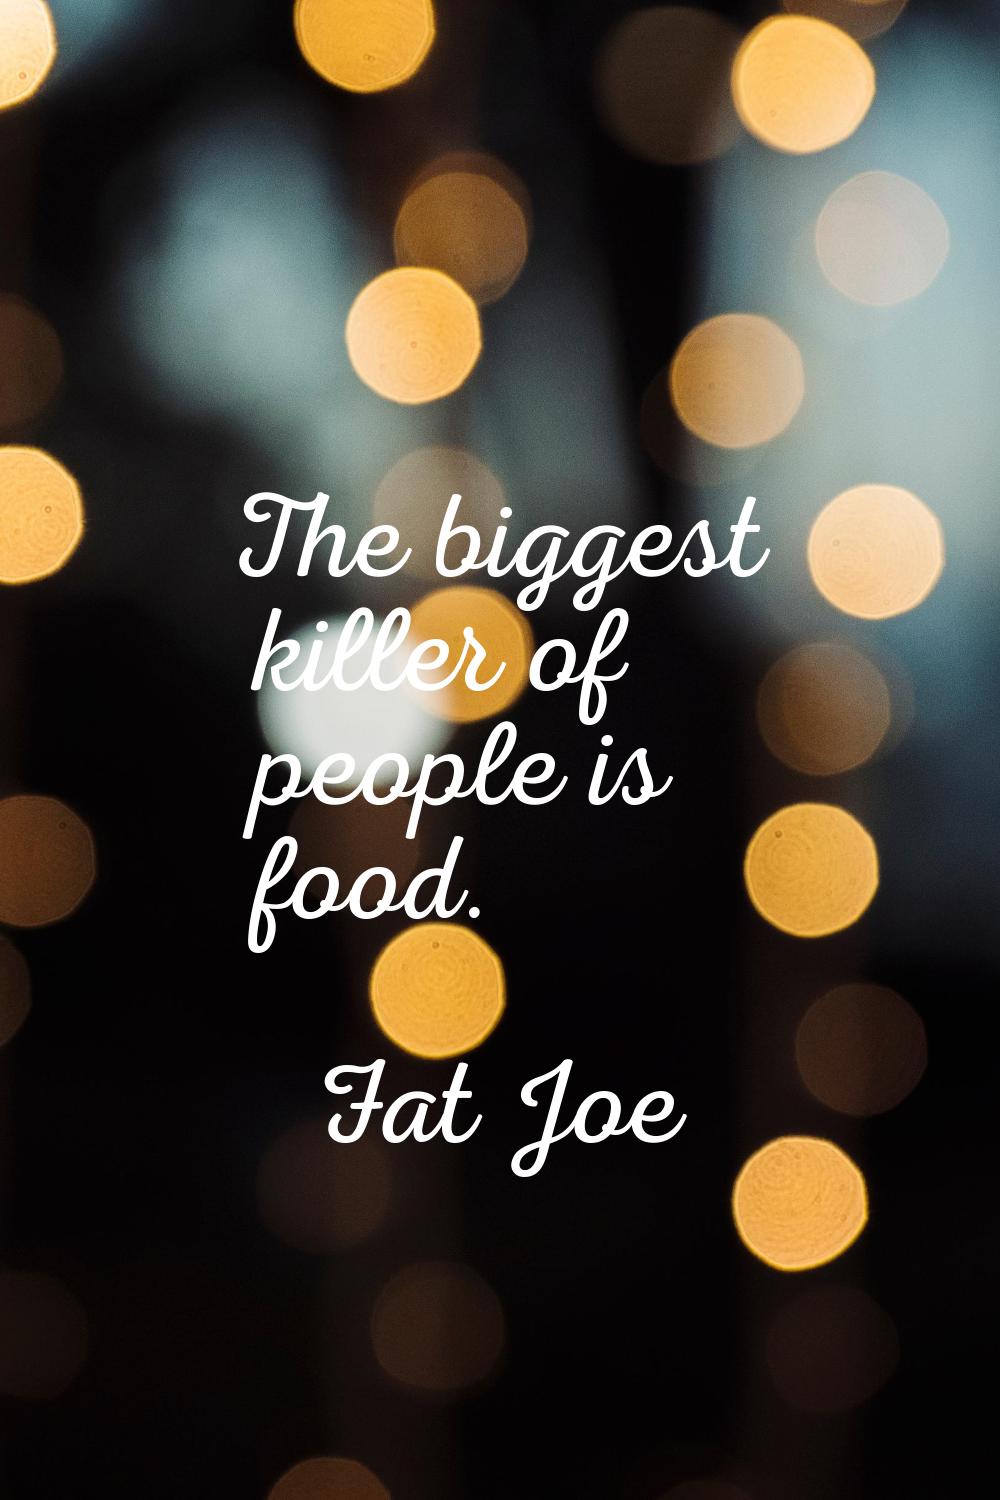 The biggest killer of people is food.